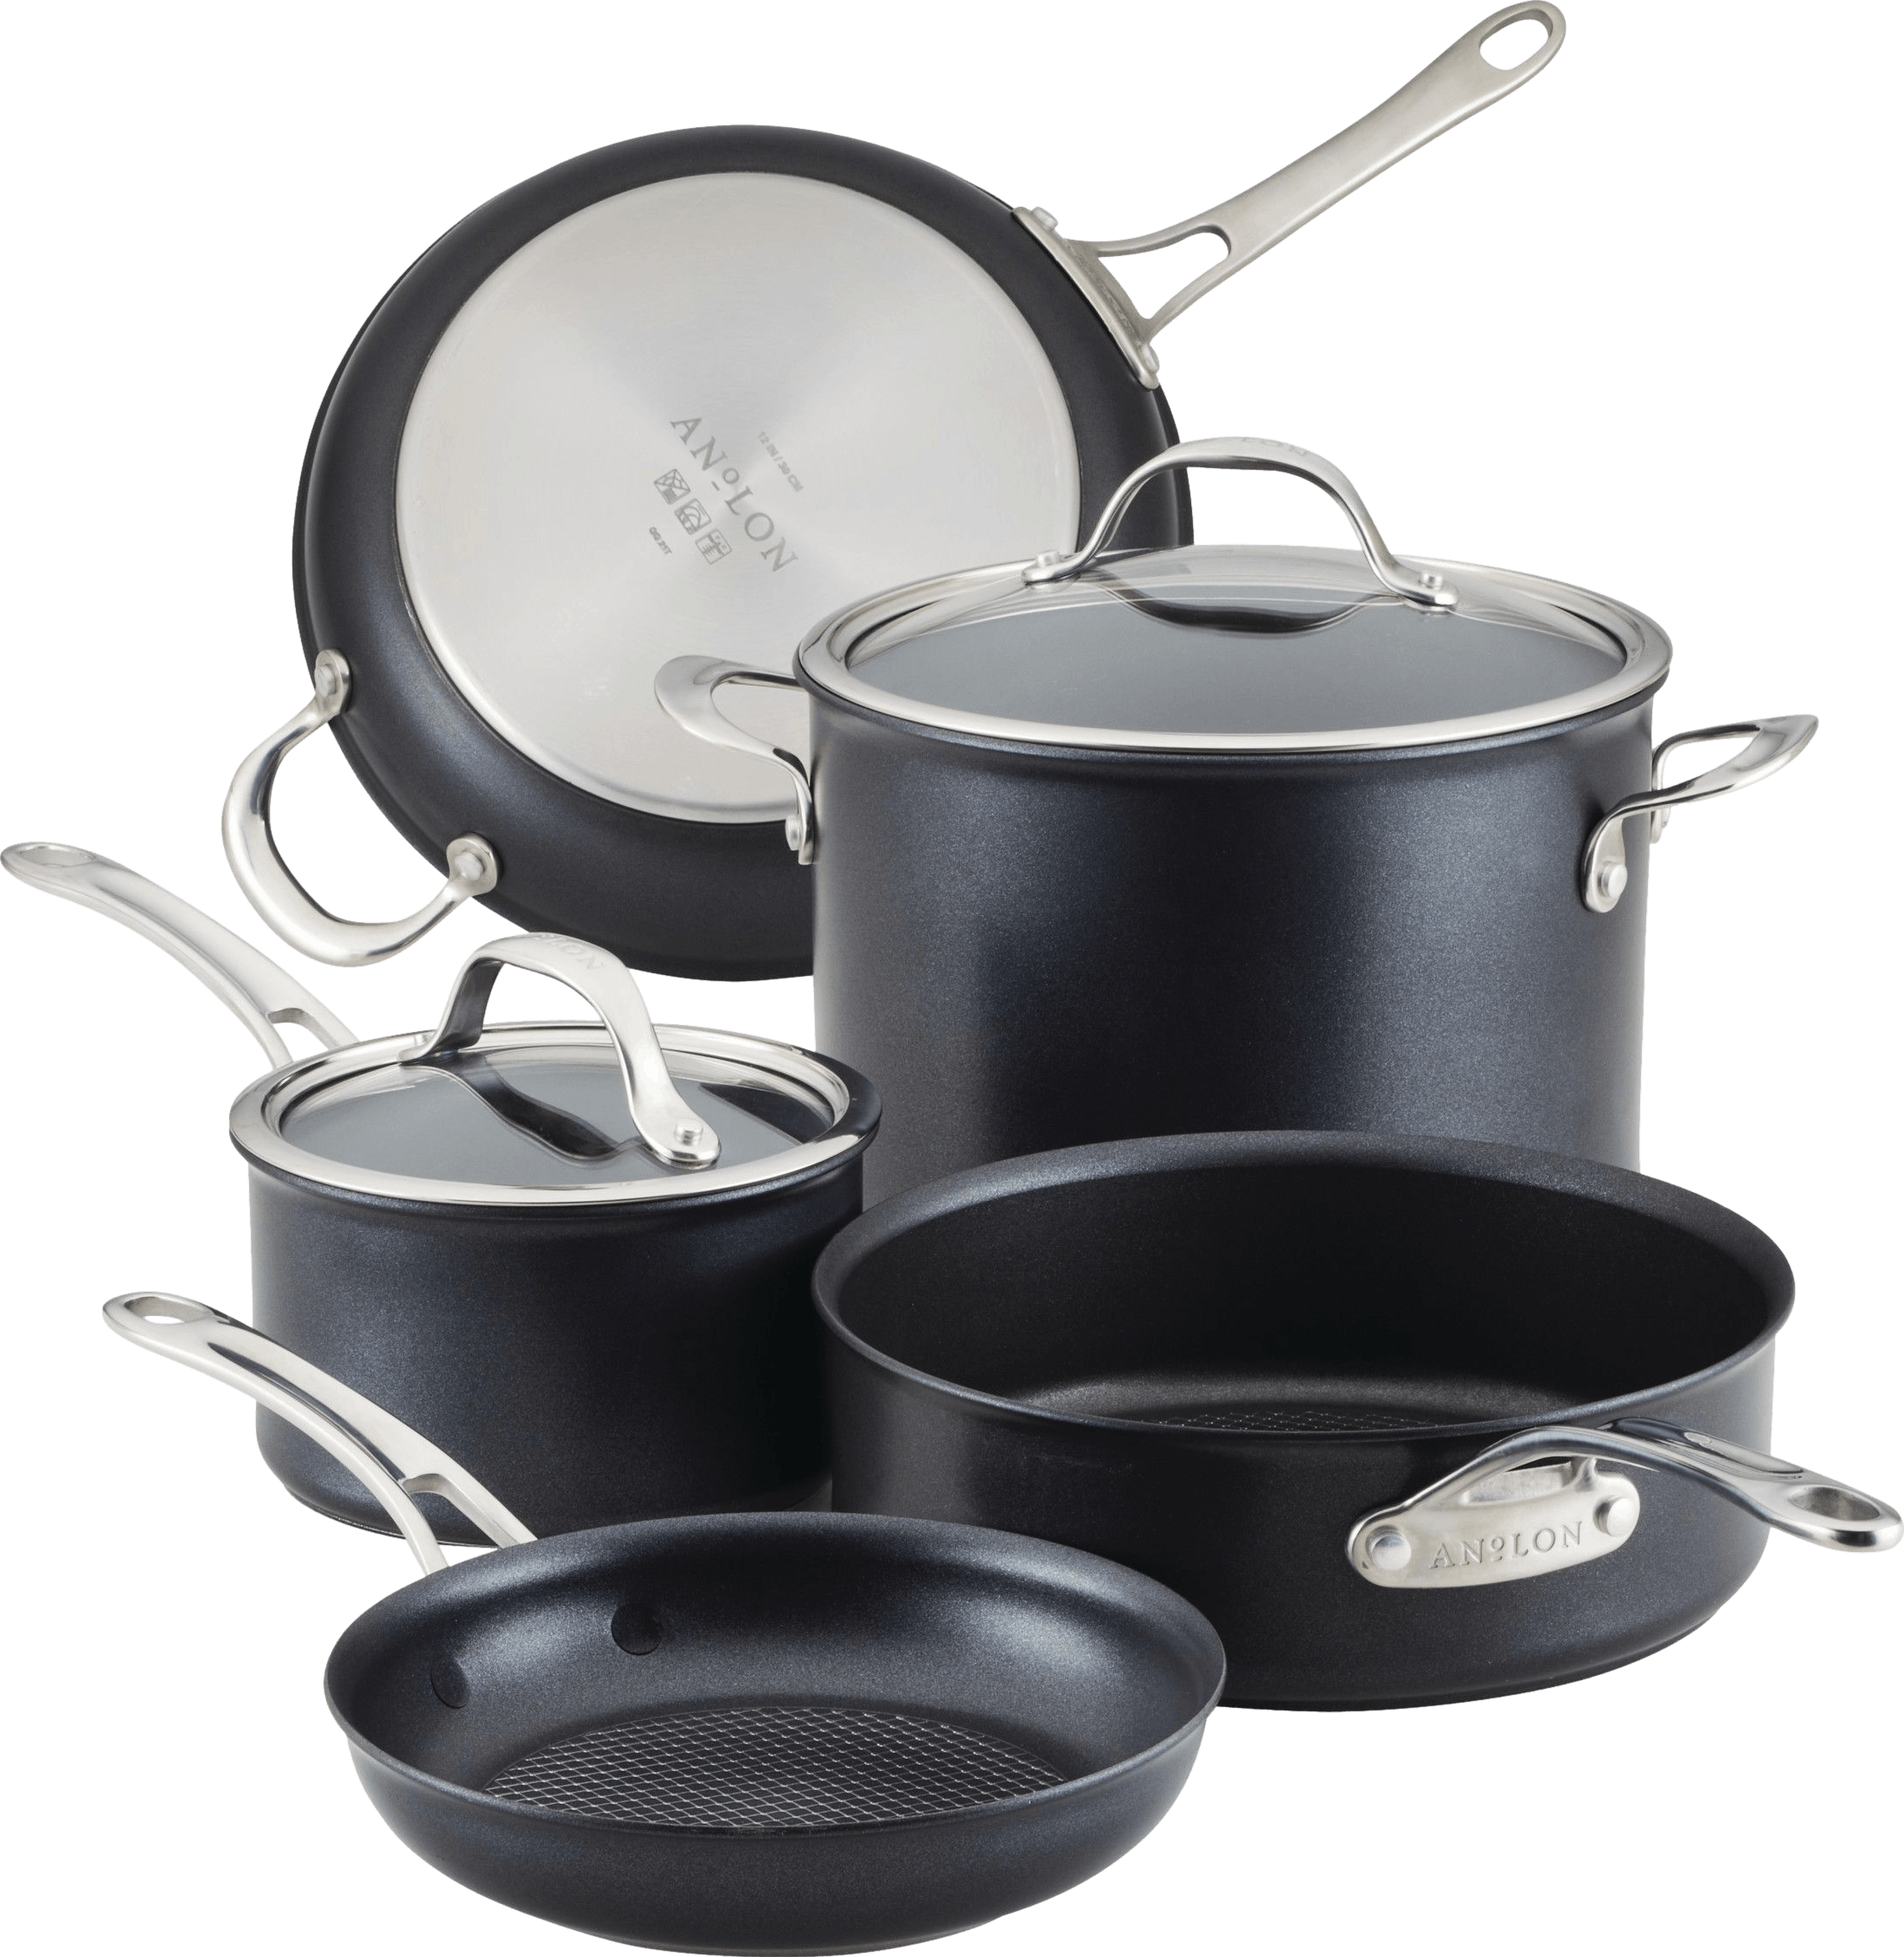 Anolon X Hybrid Nonstick Cookware Induction Pots and Pans Set, 7-Piece, Super Dark Gray